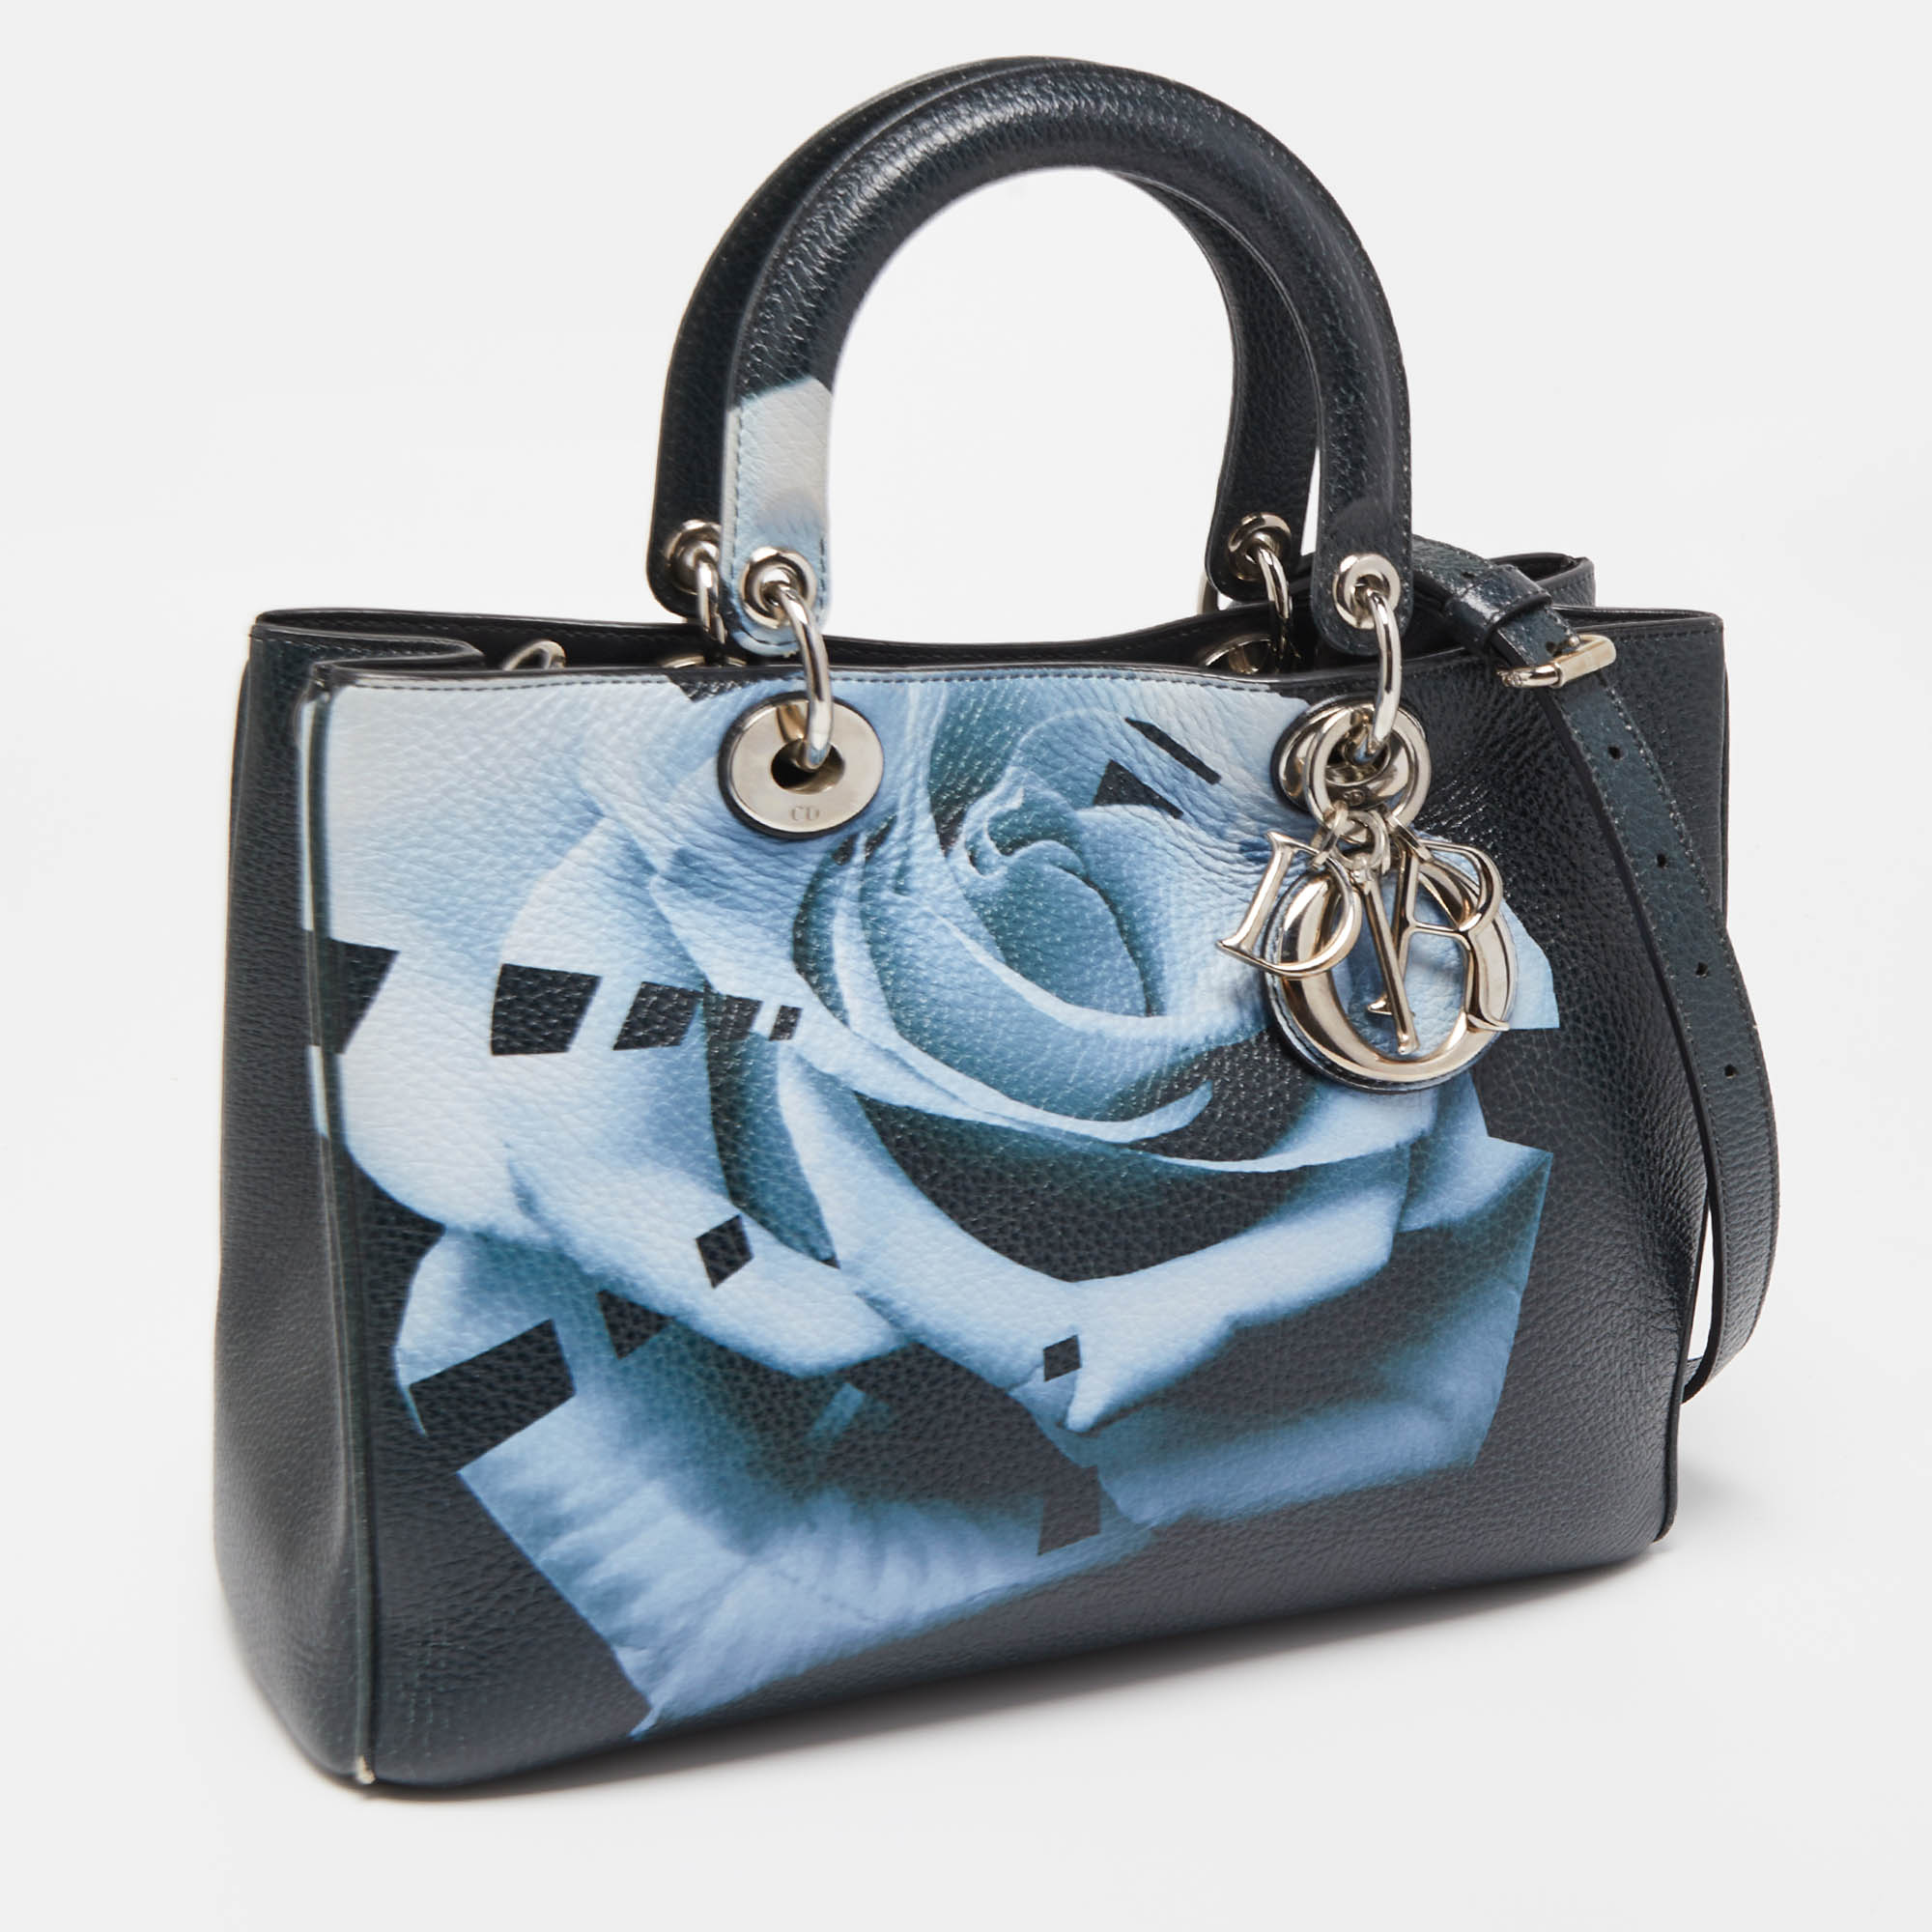 Dior Navy Blue Floral Print Leather Medium Diorissimo Shopper Tote